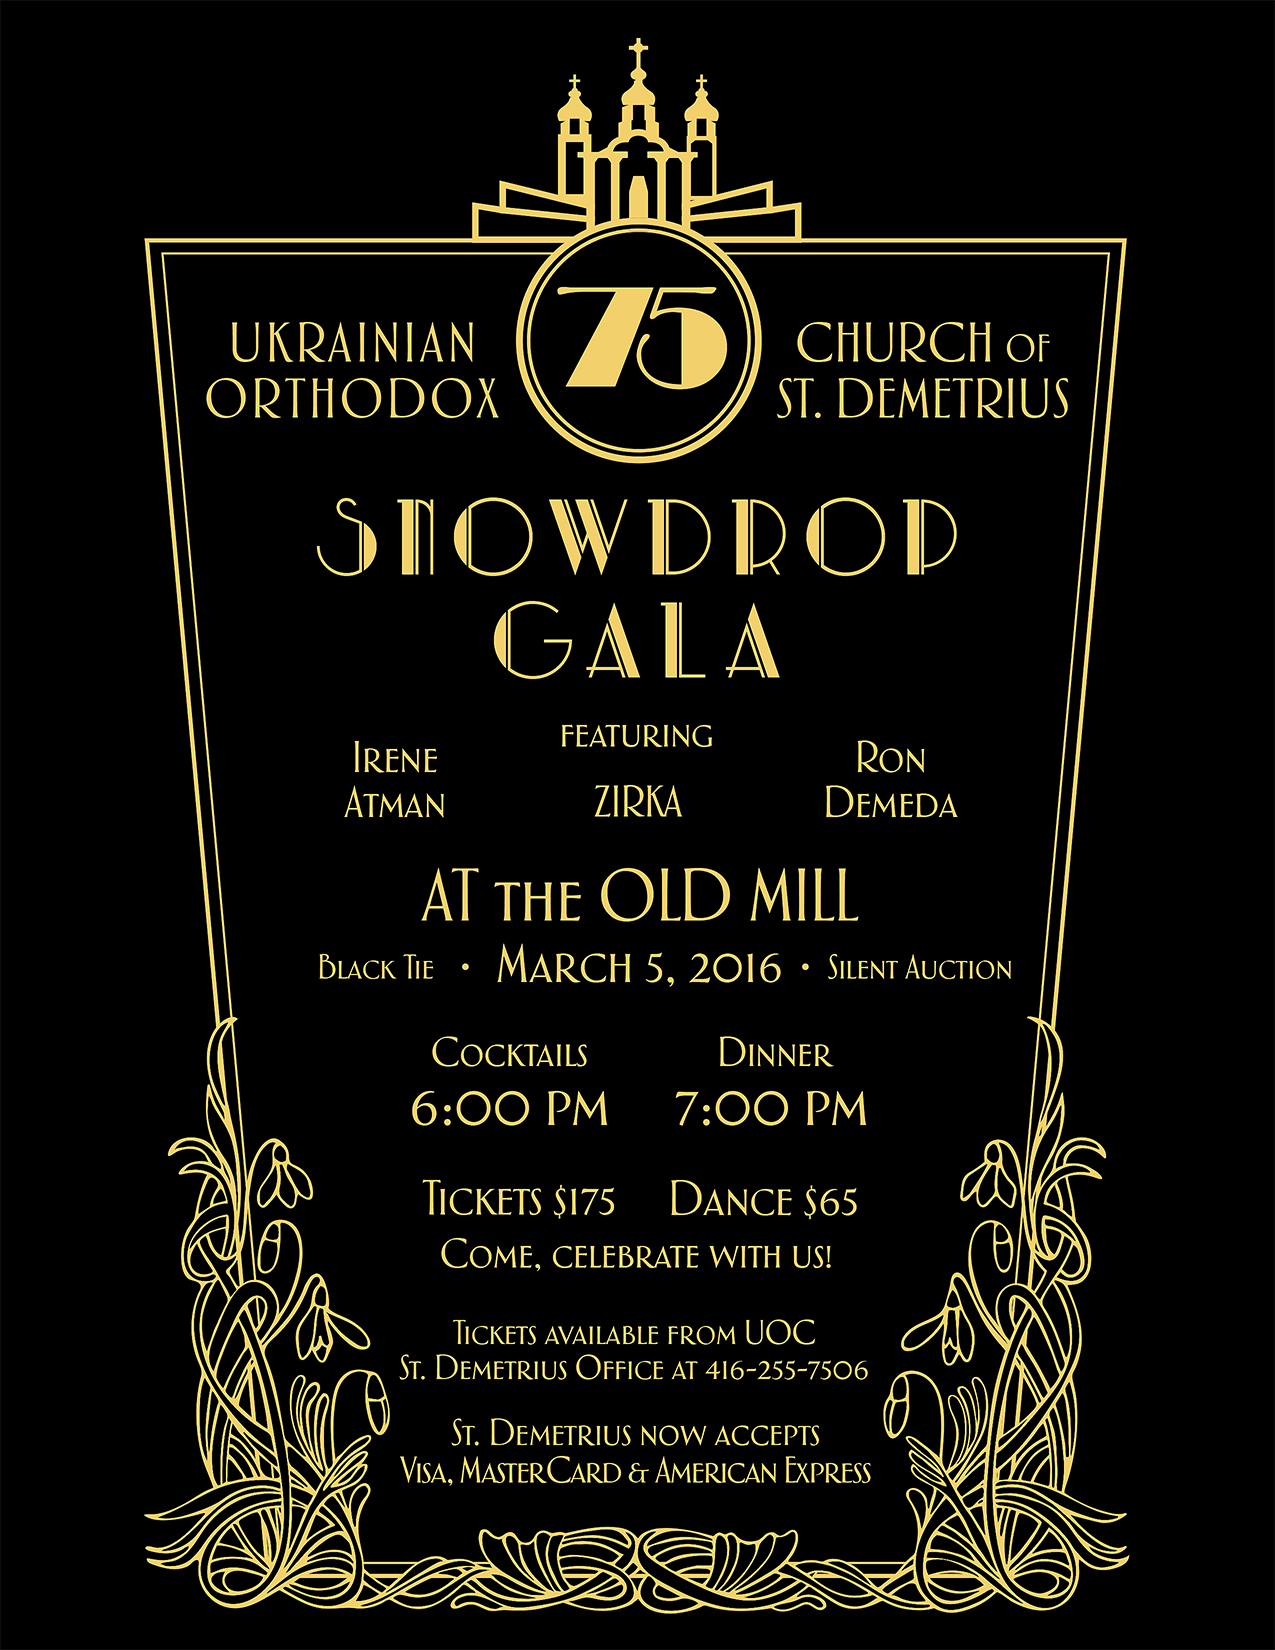 uocc-east_St.Demetrius_75th_Anniversary_SnowDrop_Gala-Poster